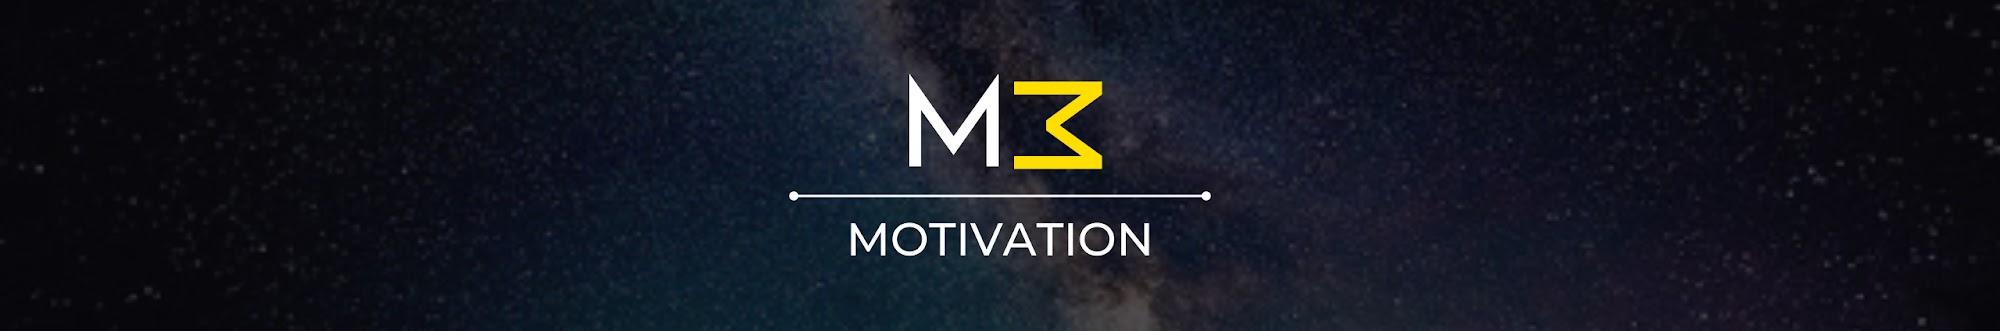 M3 Motivation